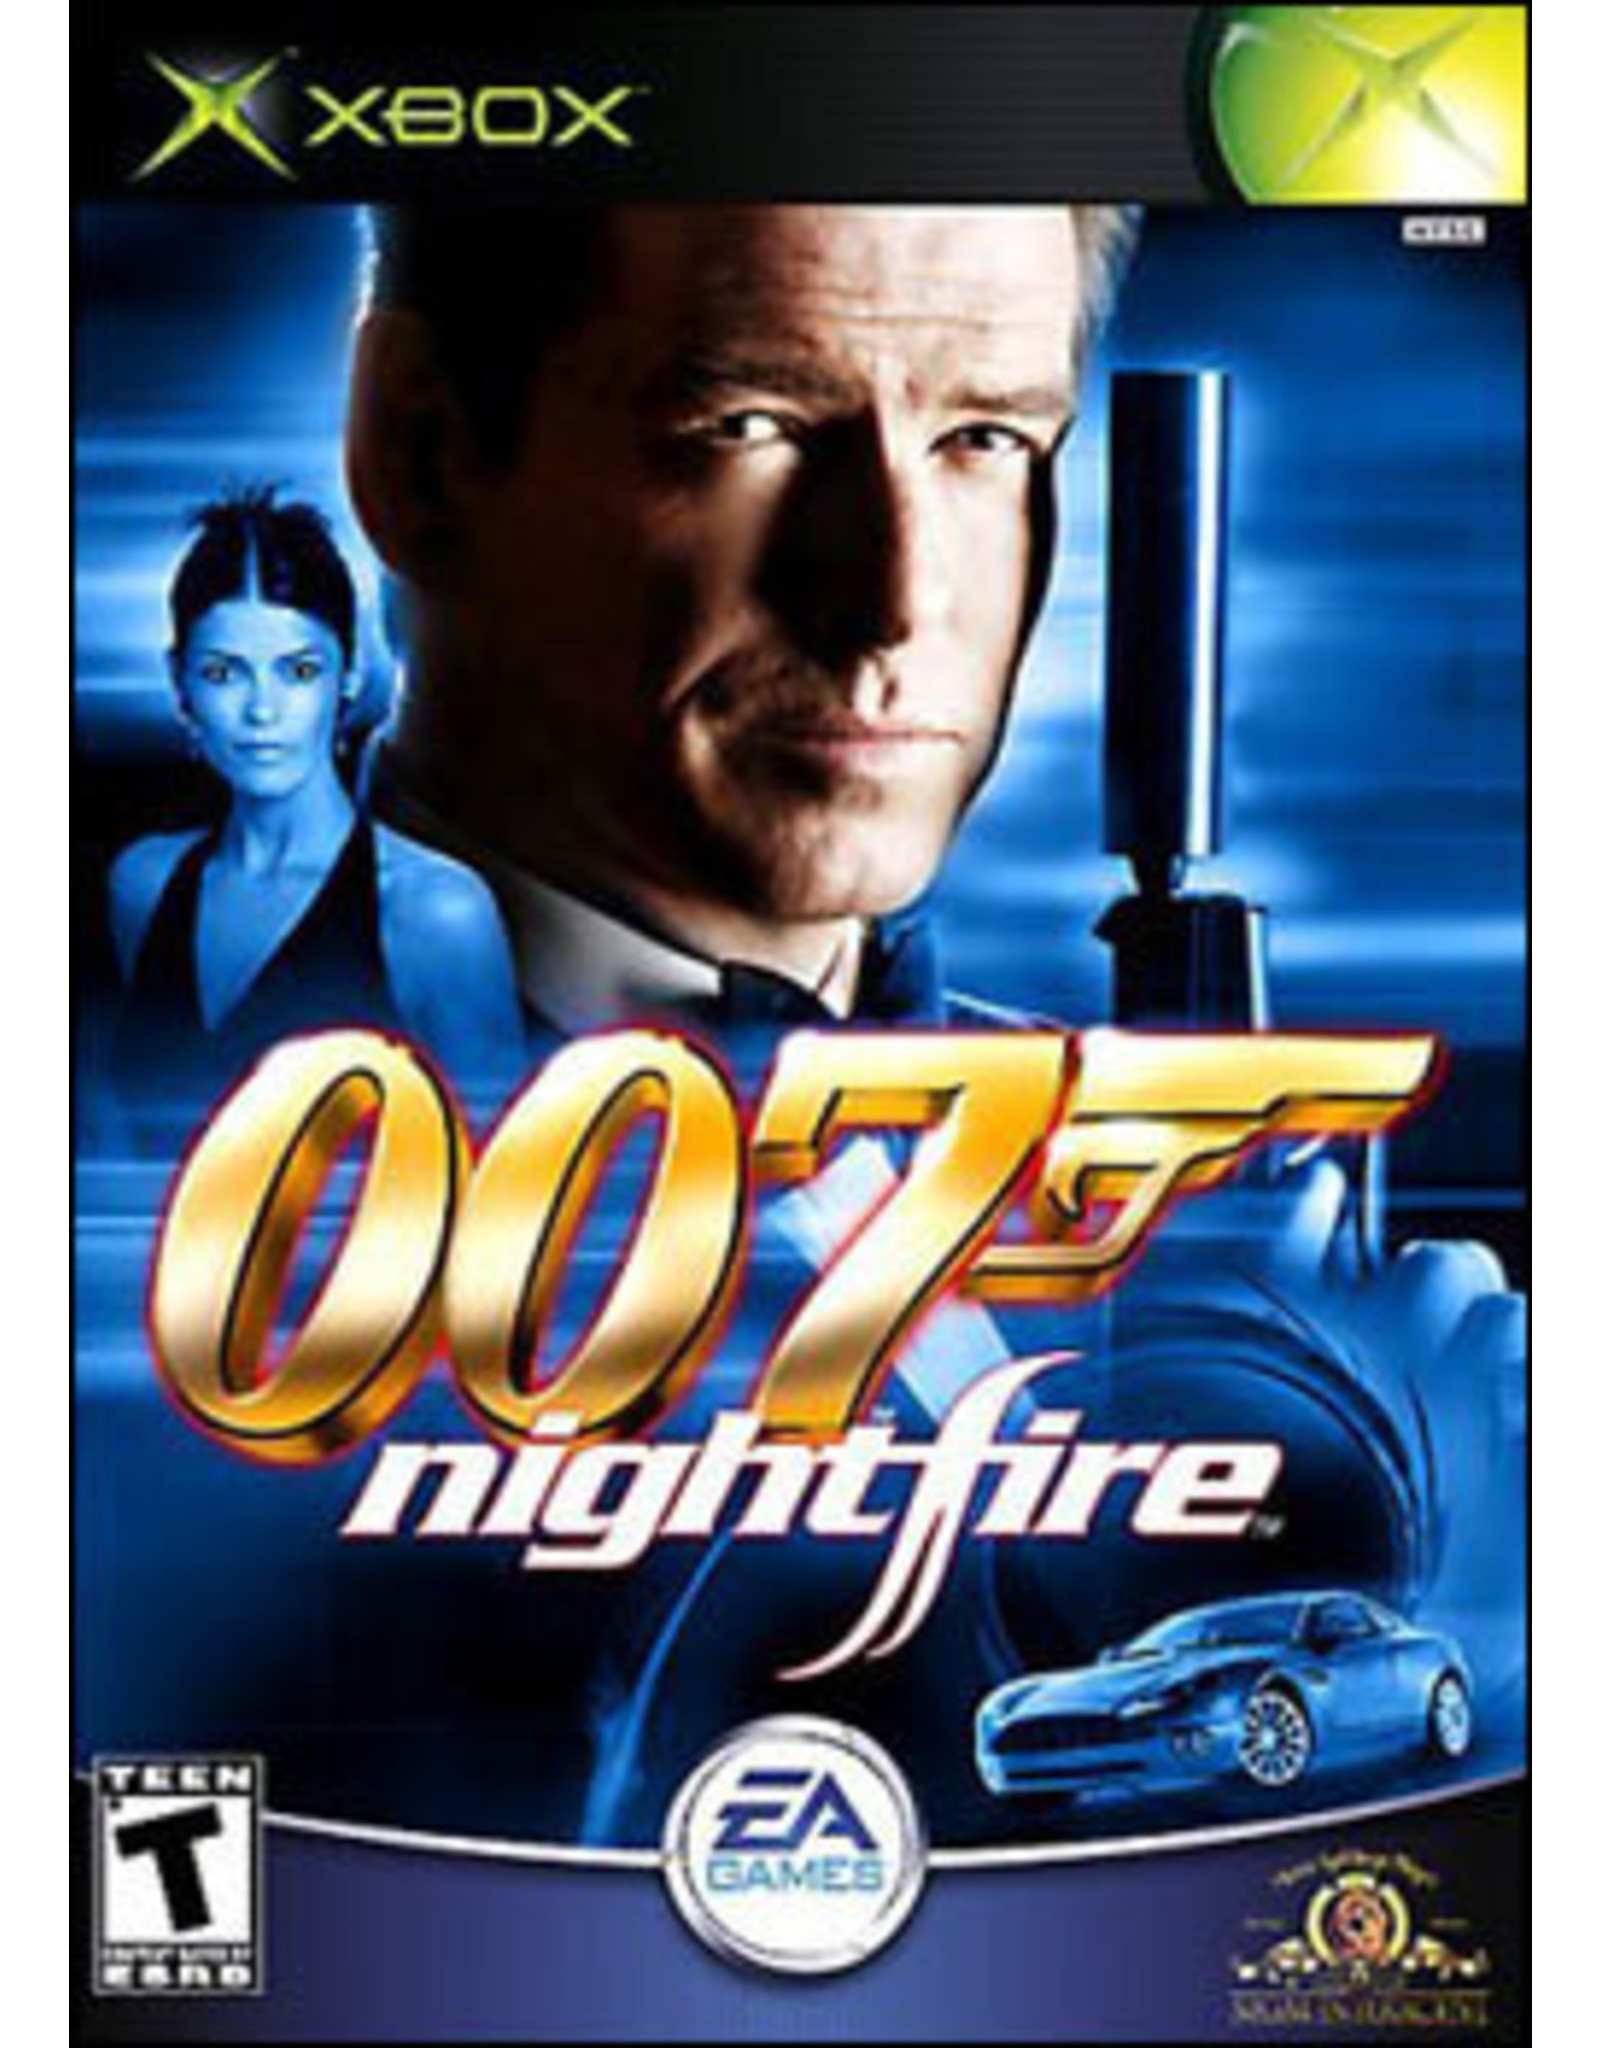 Xbox 007 Nightfire (CiB)